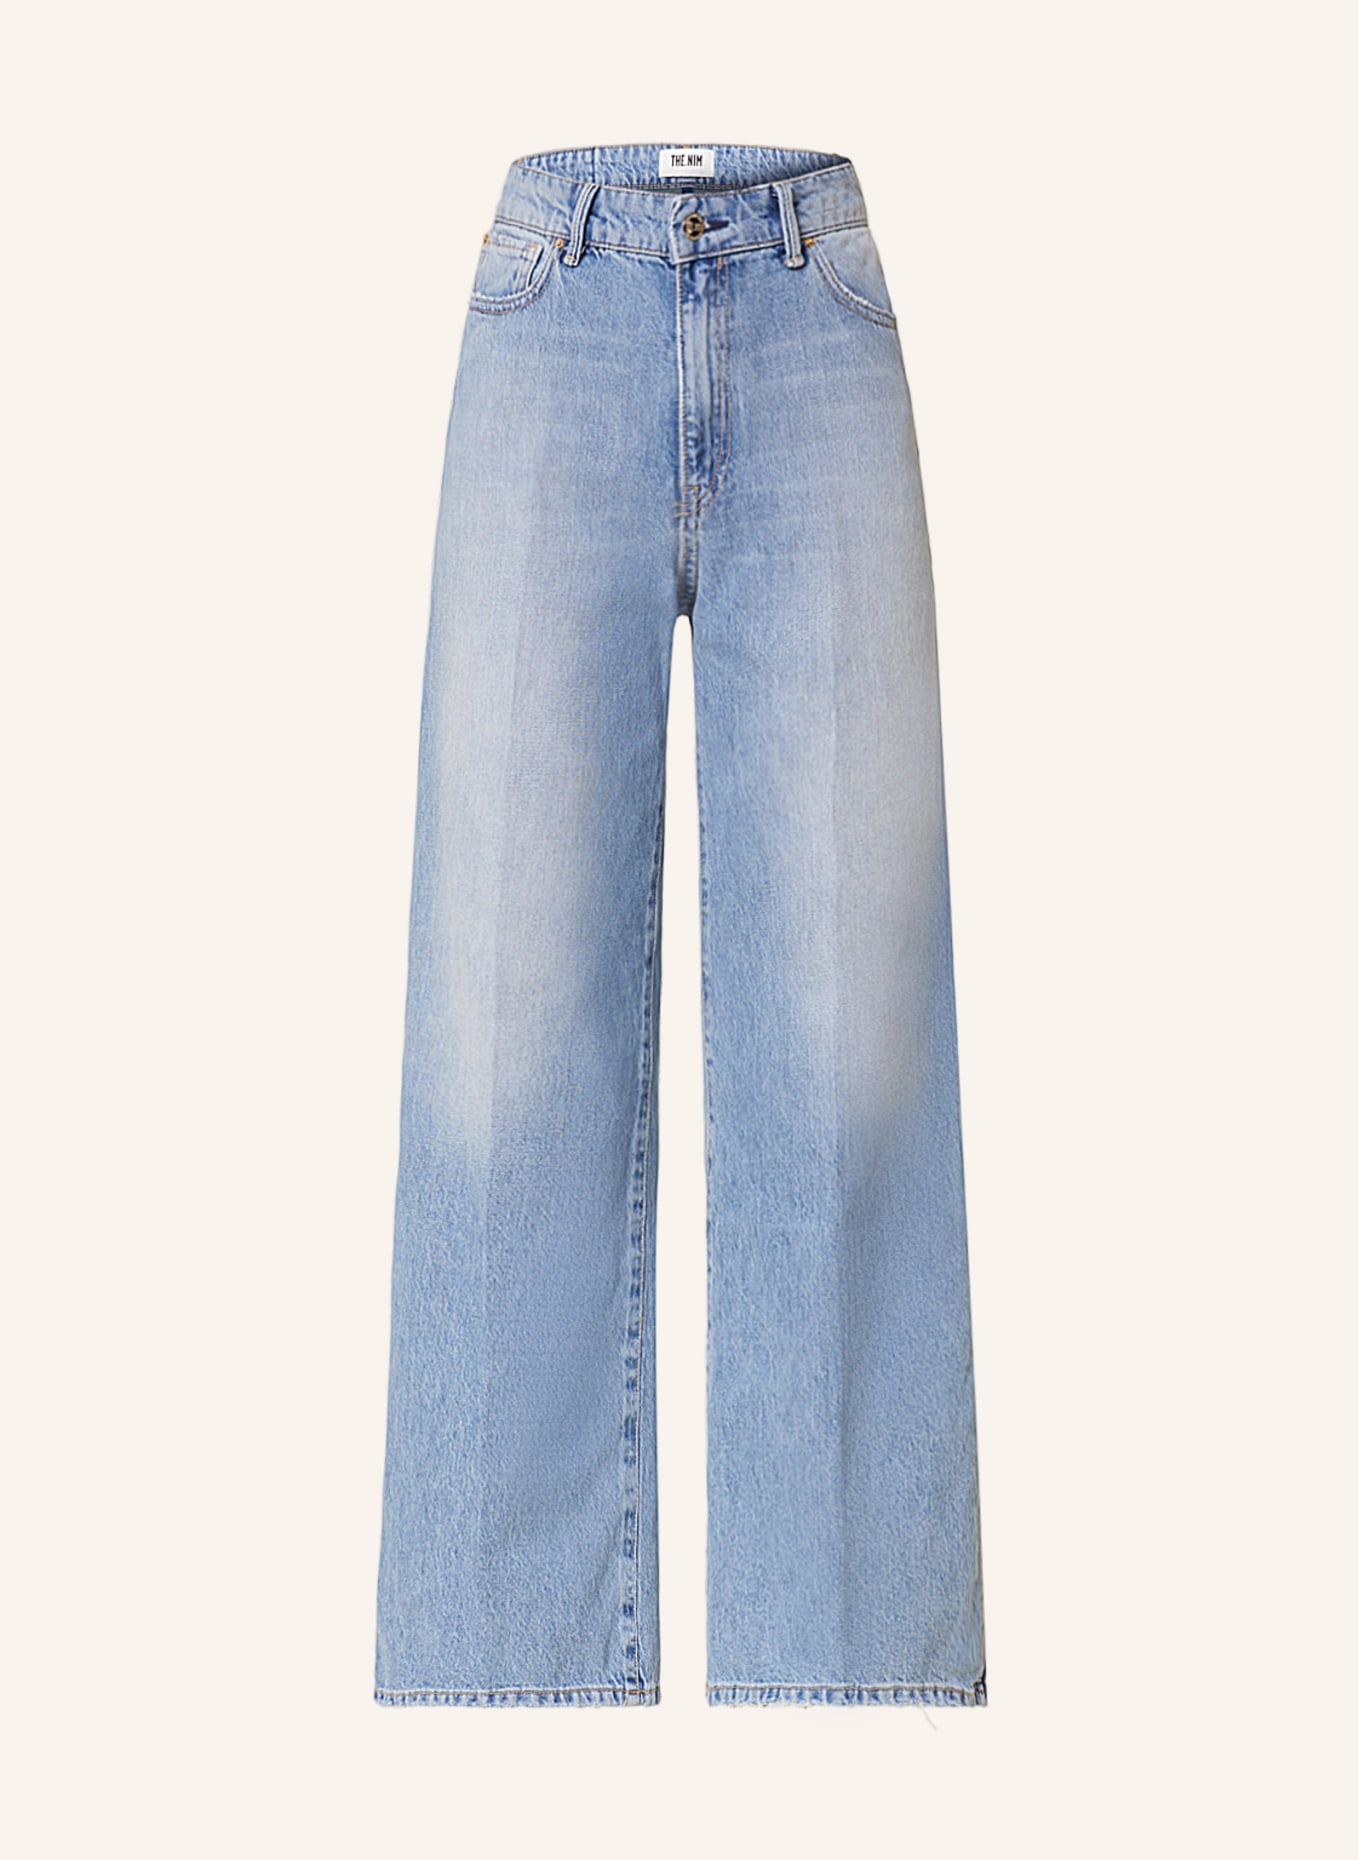 THE.NIM STANDARD Straight Jeans DEBBIE, Farbe: W721-LGW LIGHT WASHED BLUE (Bild 1)